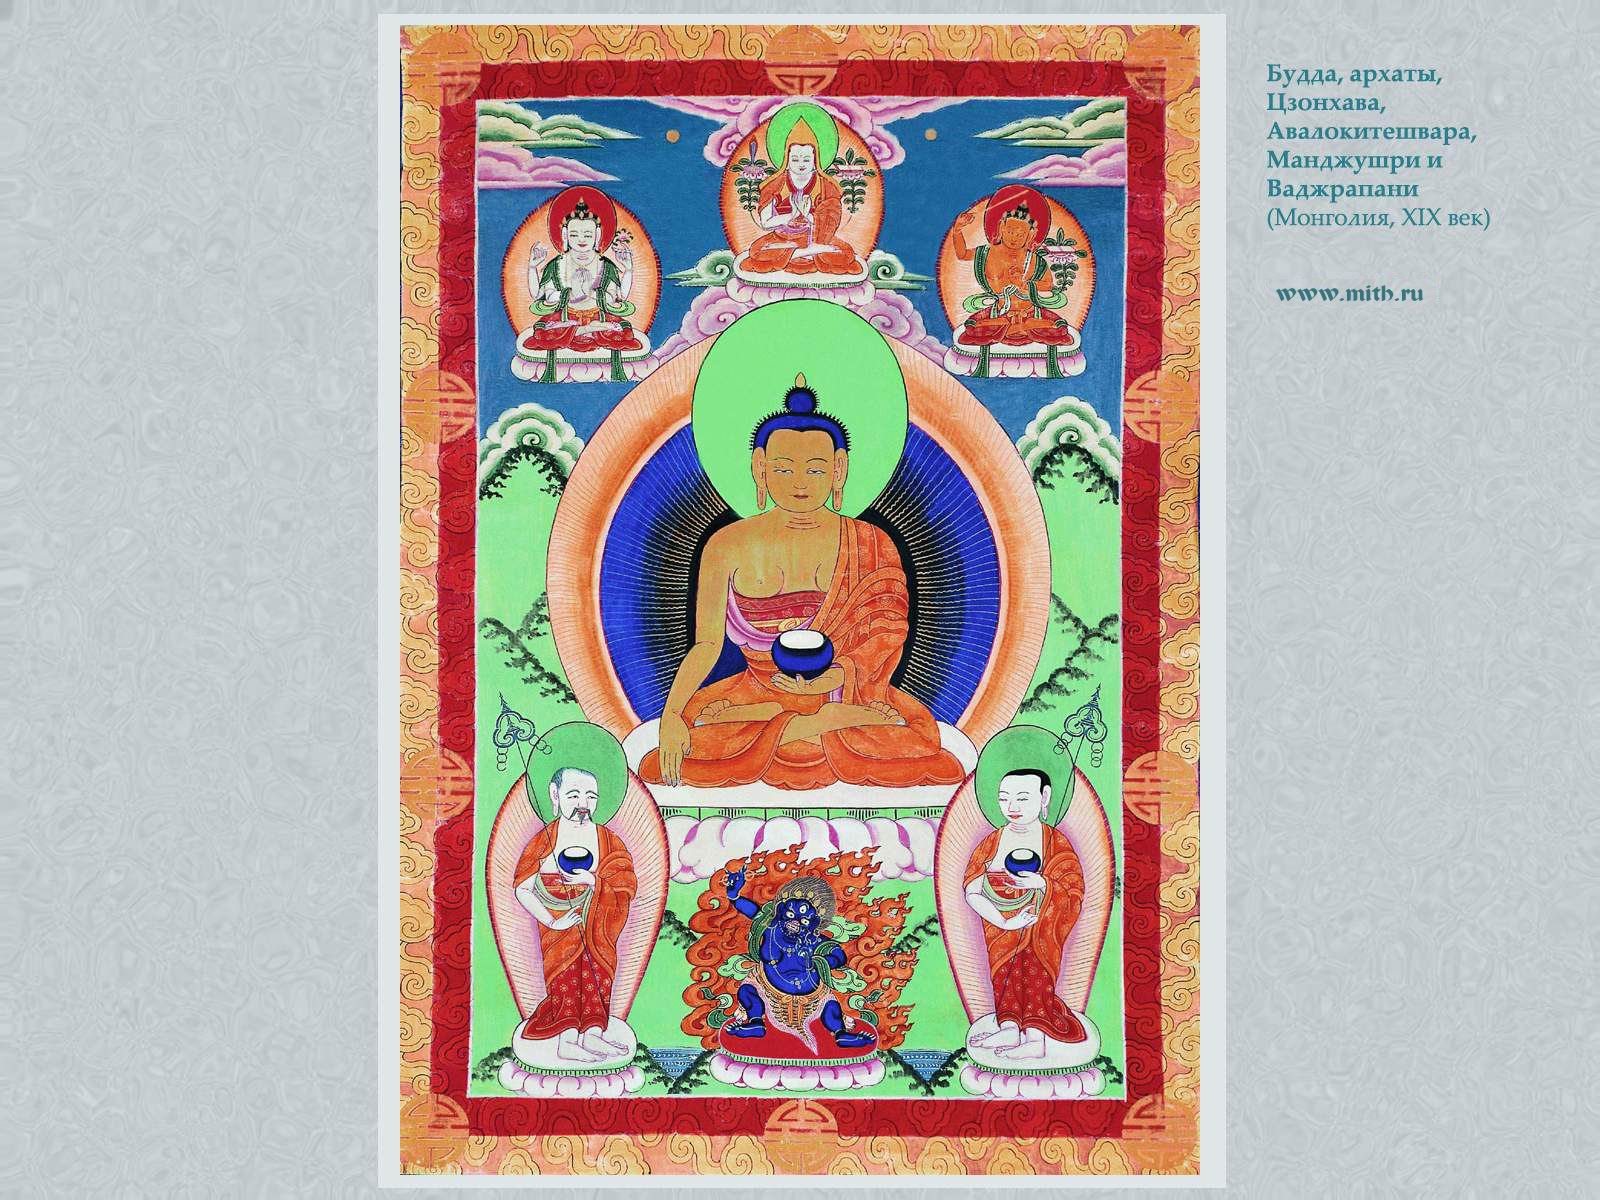 Будда Шакьямуни, Цзонхава,
Манджушри, Ваджрапани, Авалокитешвара

перейти к книге 'Тибетская живопись'